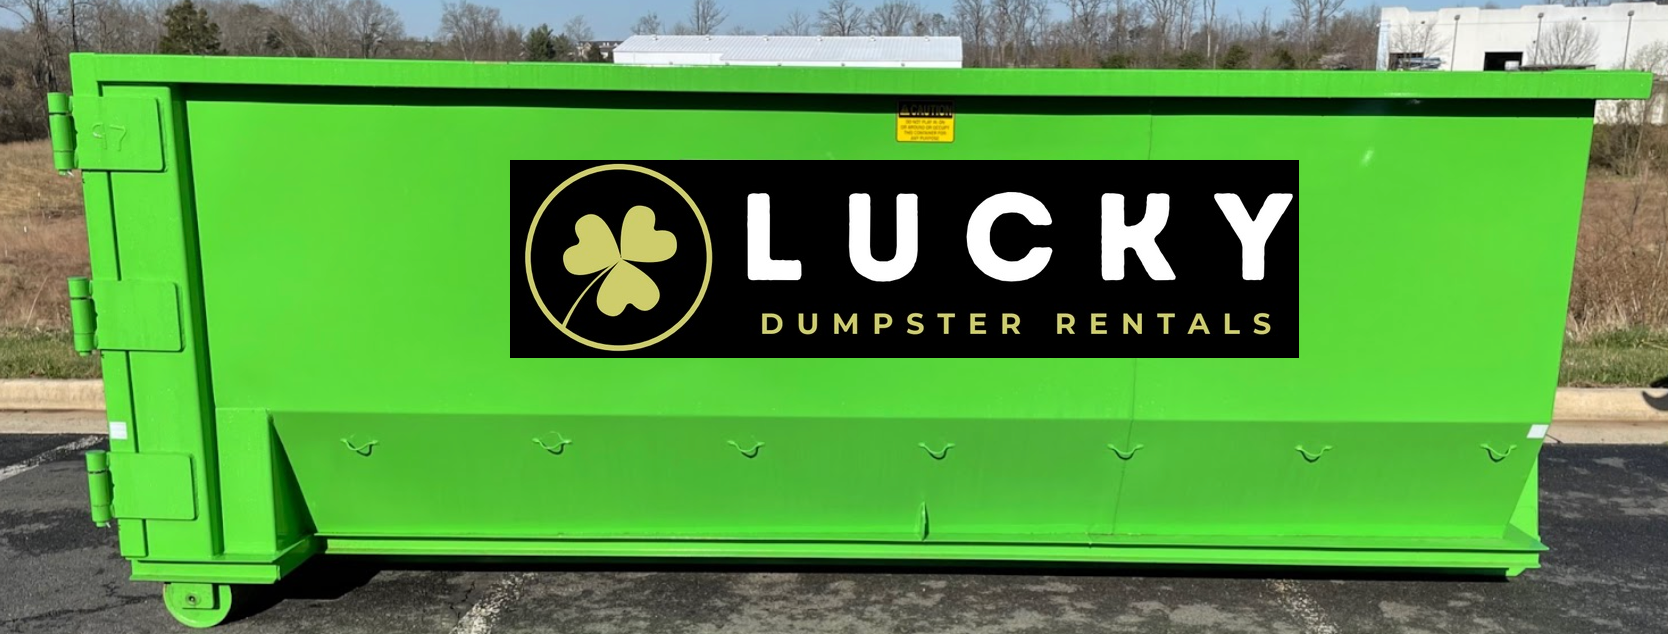 Fayetteville Dumpster Rental - Lucky Dumpster Rentals of Fayetteville, GA